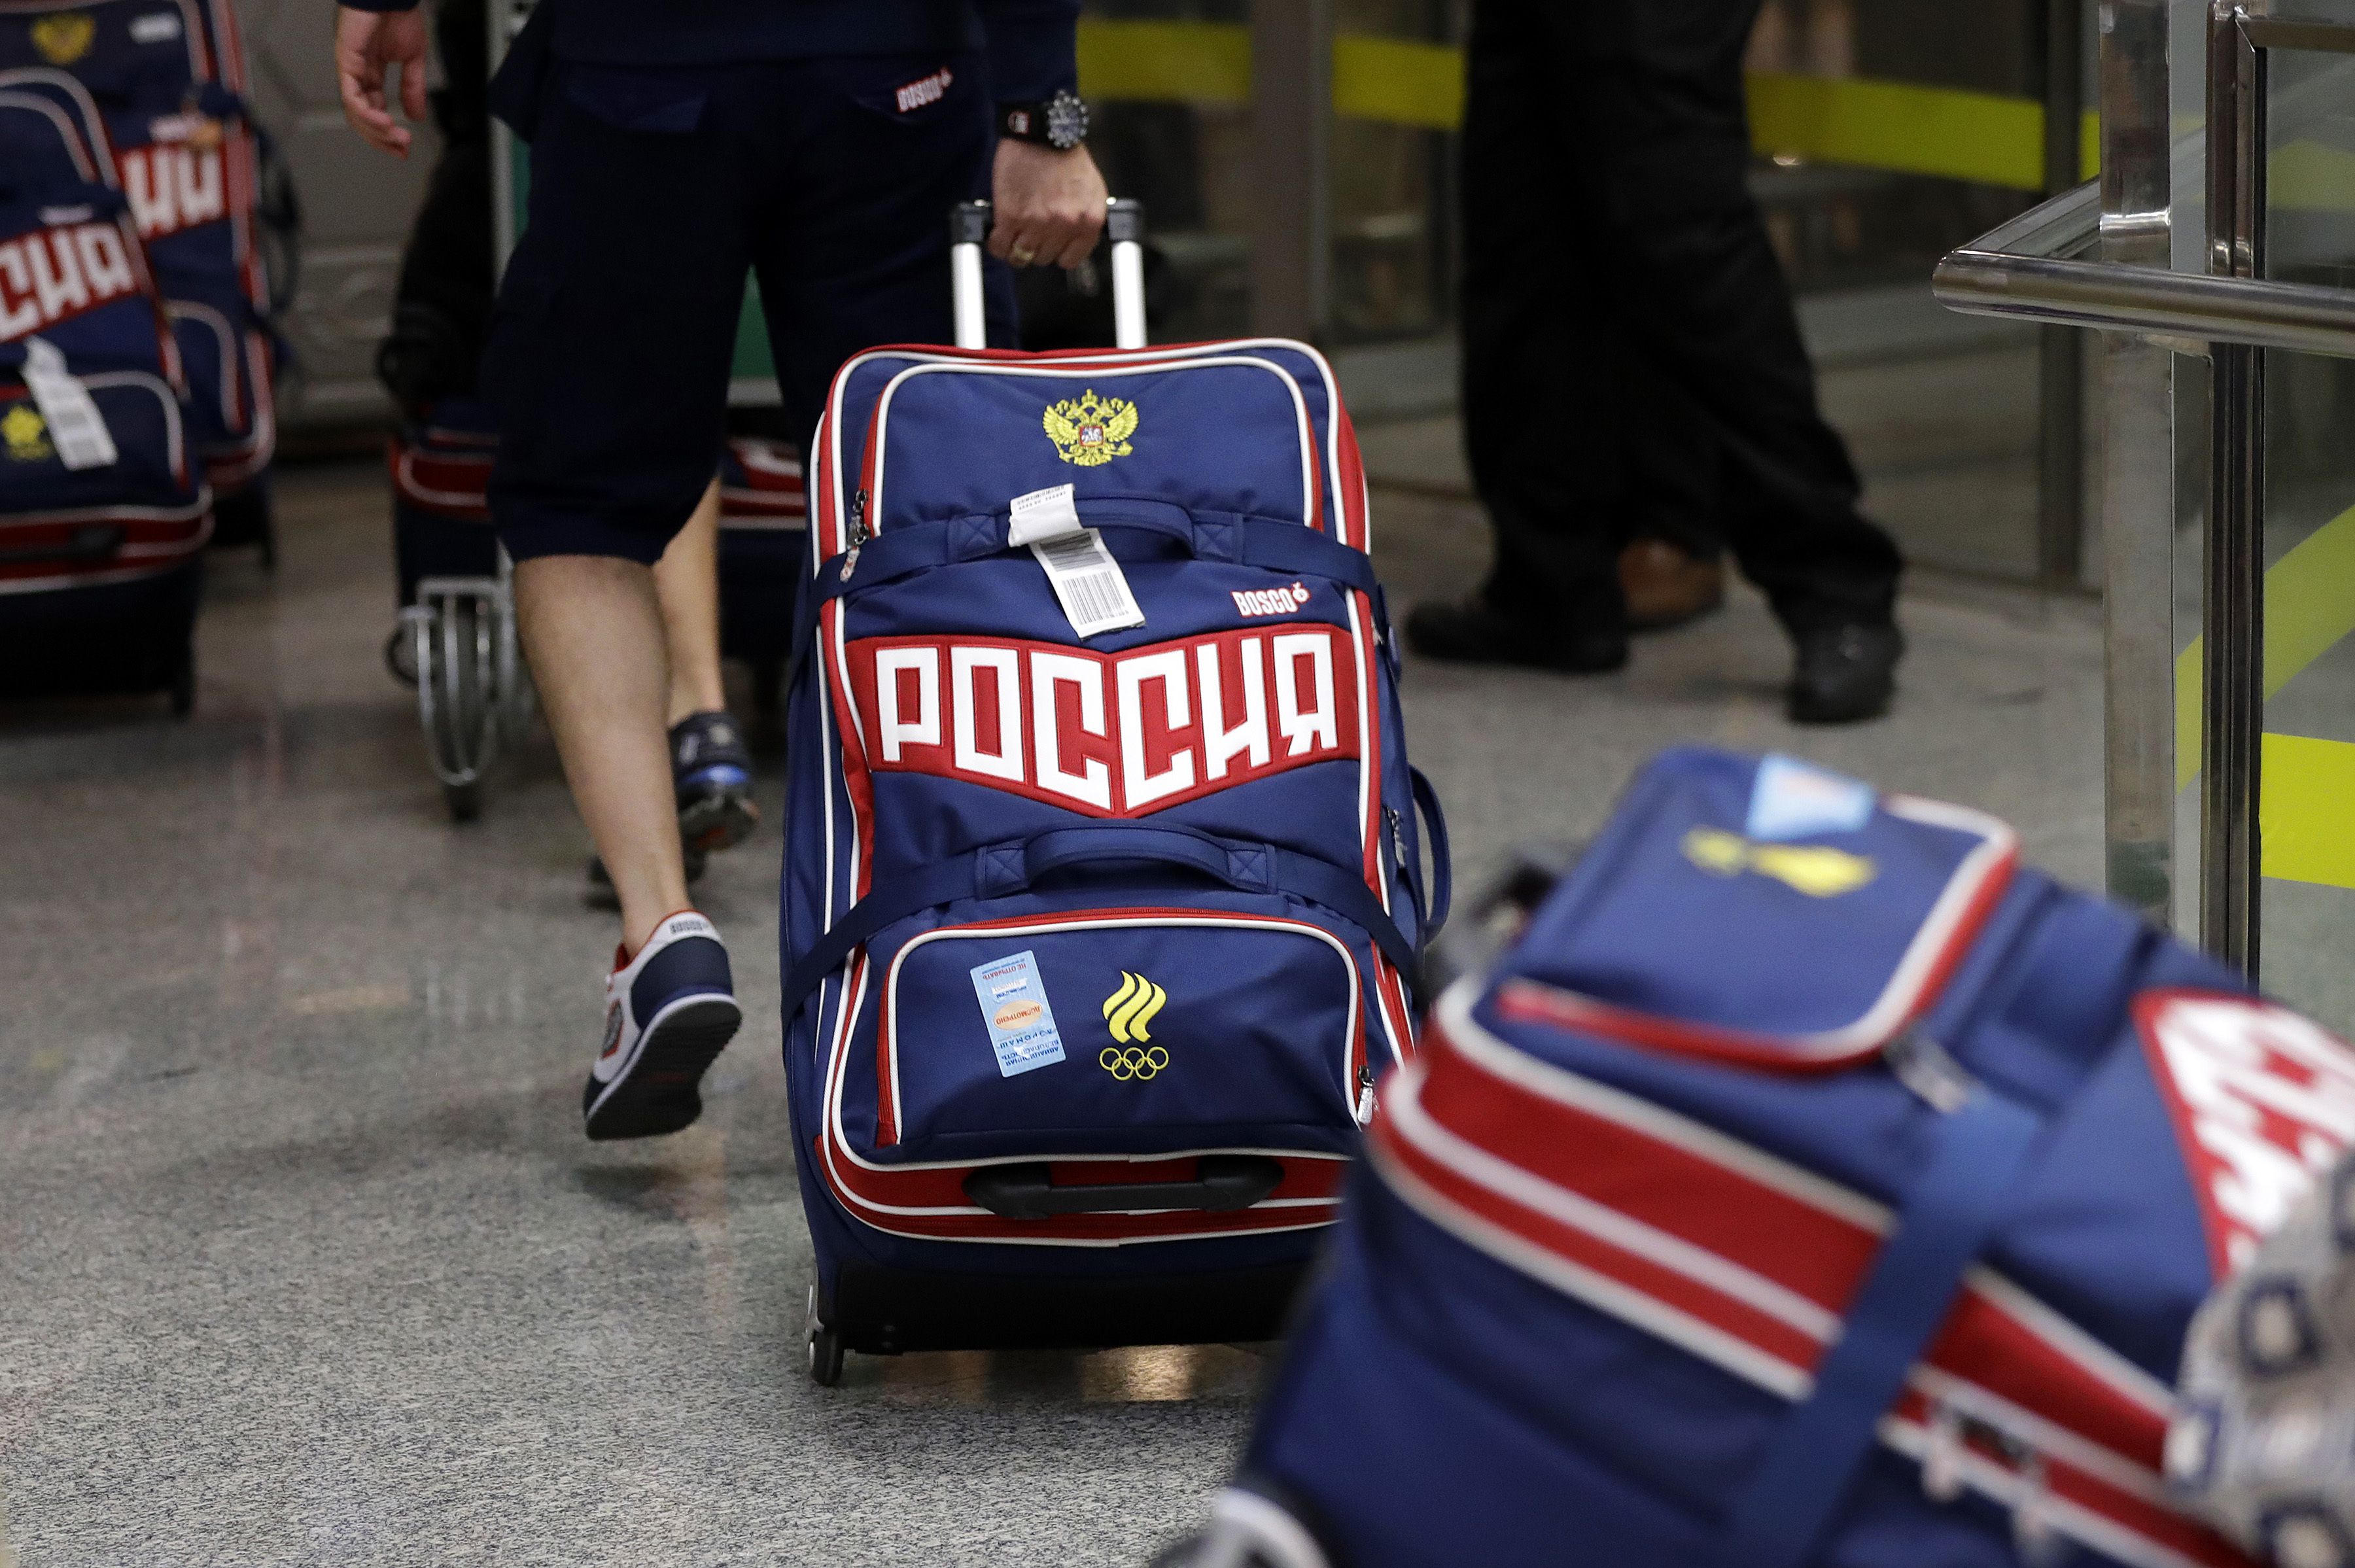 266 руски спортисти бяха допуснати до Игрите